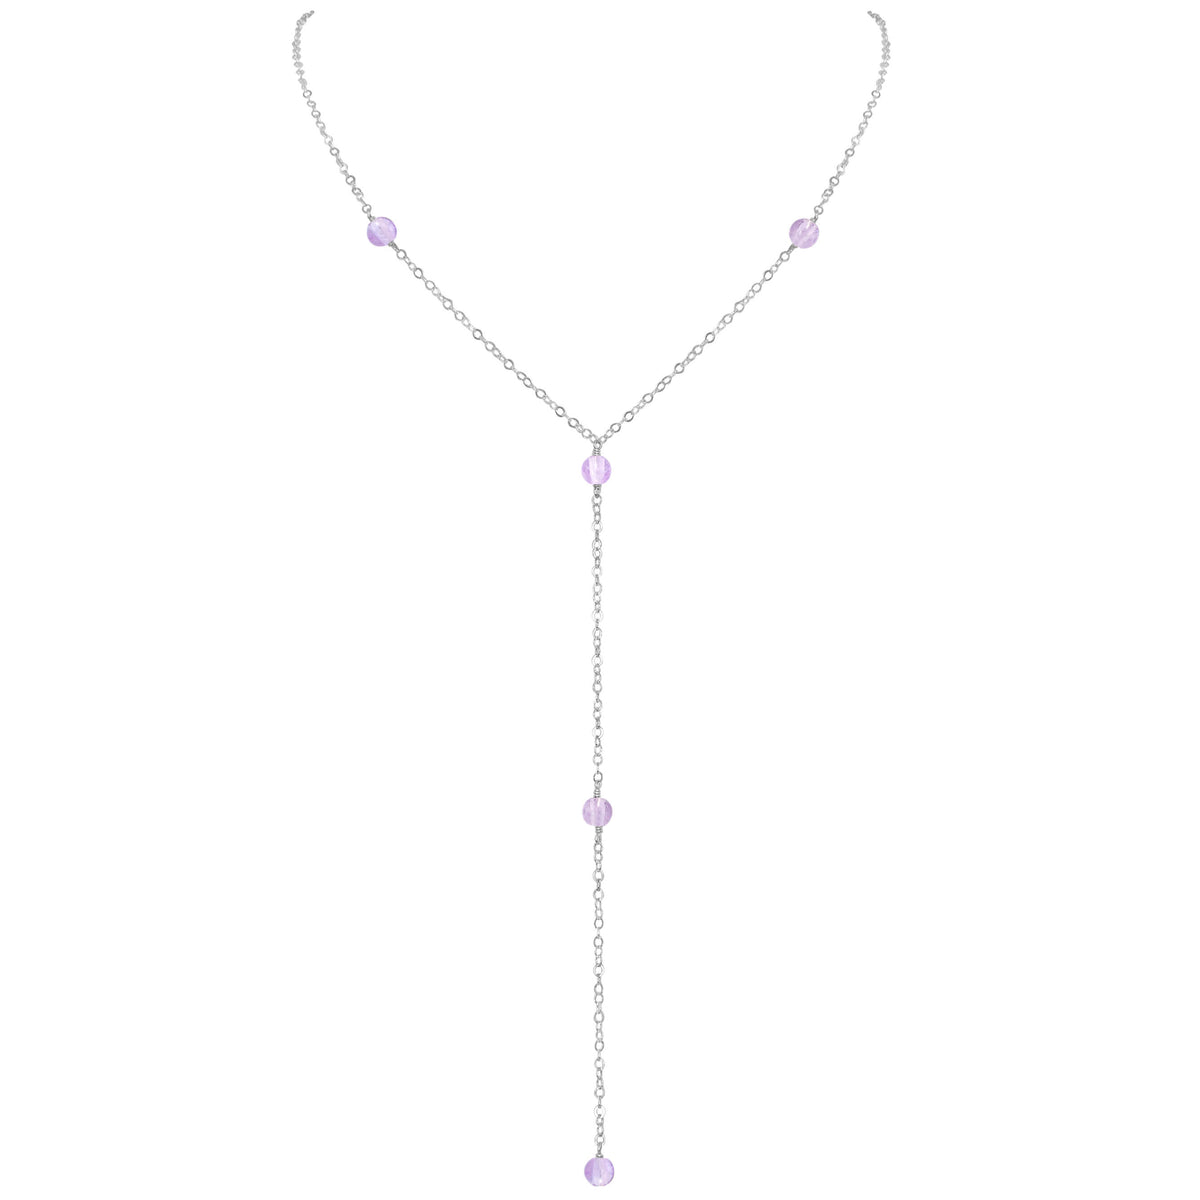 Dainty Y Necklace - Lavender Amethyst - Sterling Silver - Luna Tide Handmade Jewellery